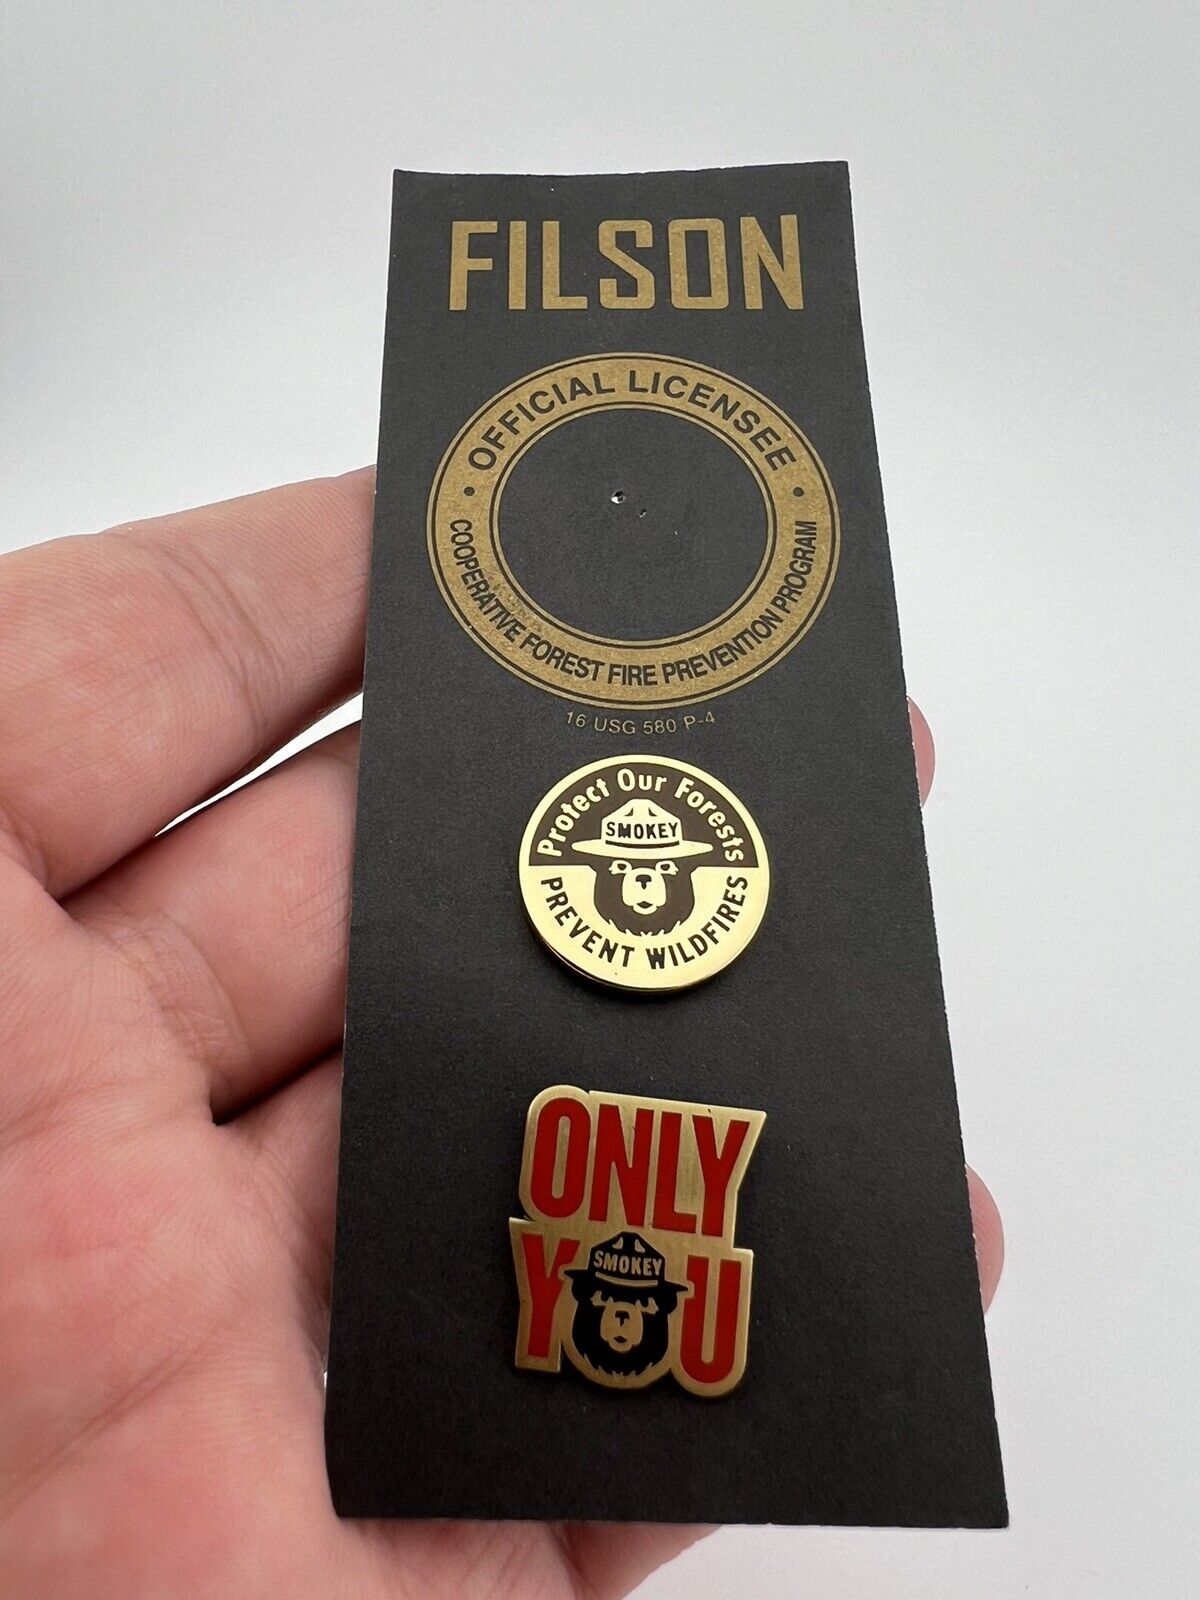 Filson Smokey Bear Pin Set - Set Of 2 Rare Pins - 1 Missing - Incomplete